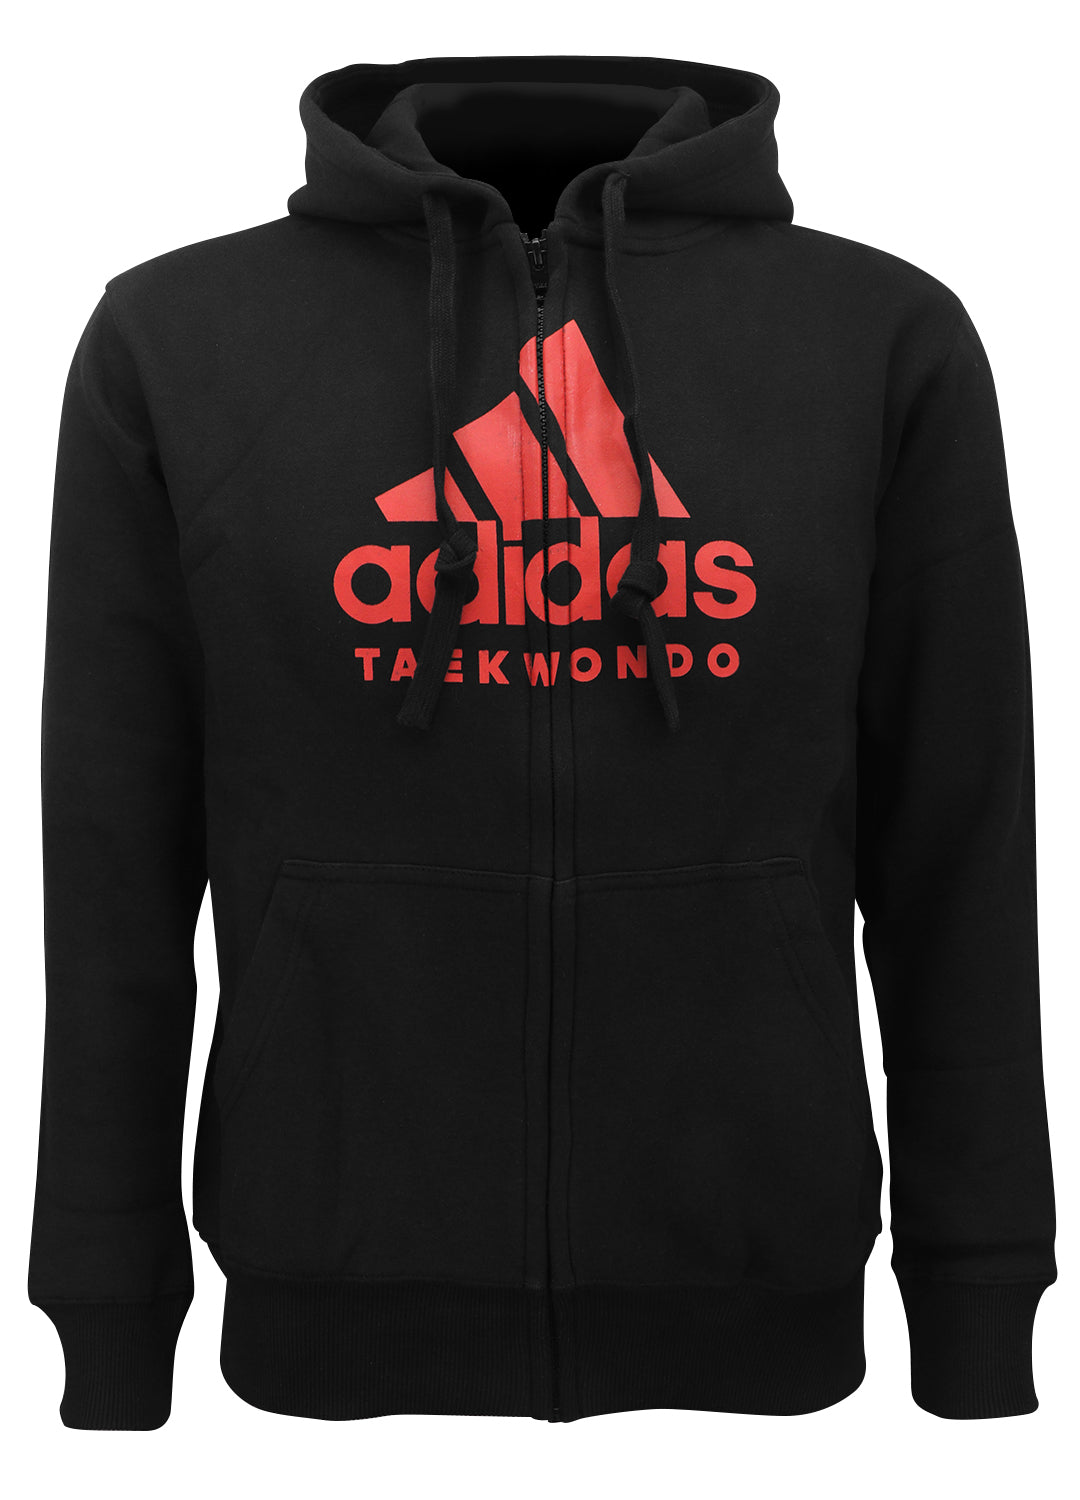 fokus Addiction bund Adidas Taekwondo full zip Hoodie – All American Martial Arts Supply